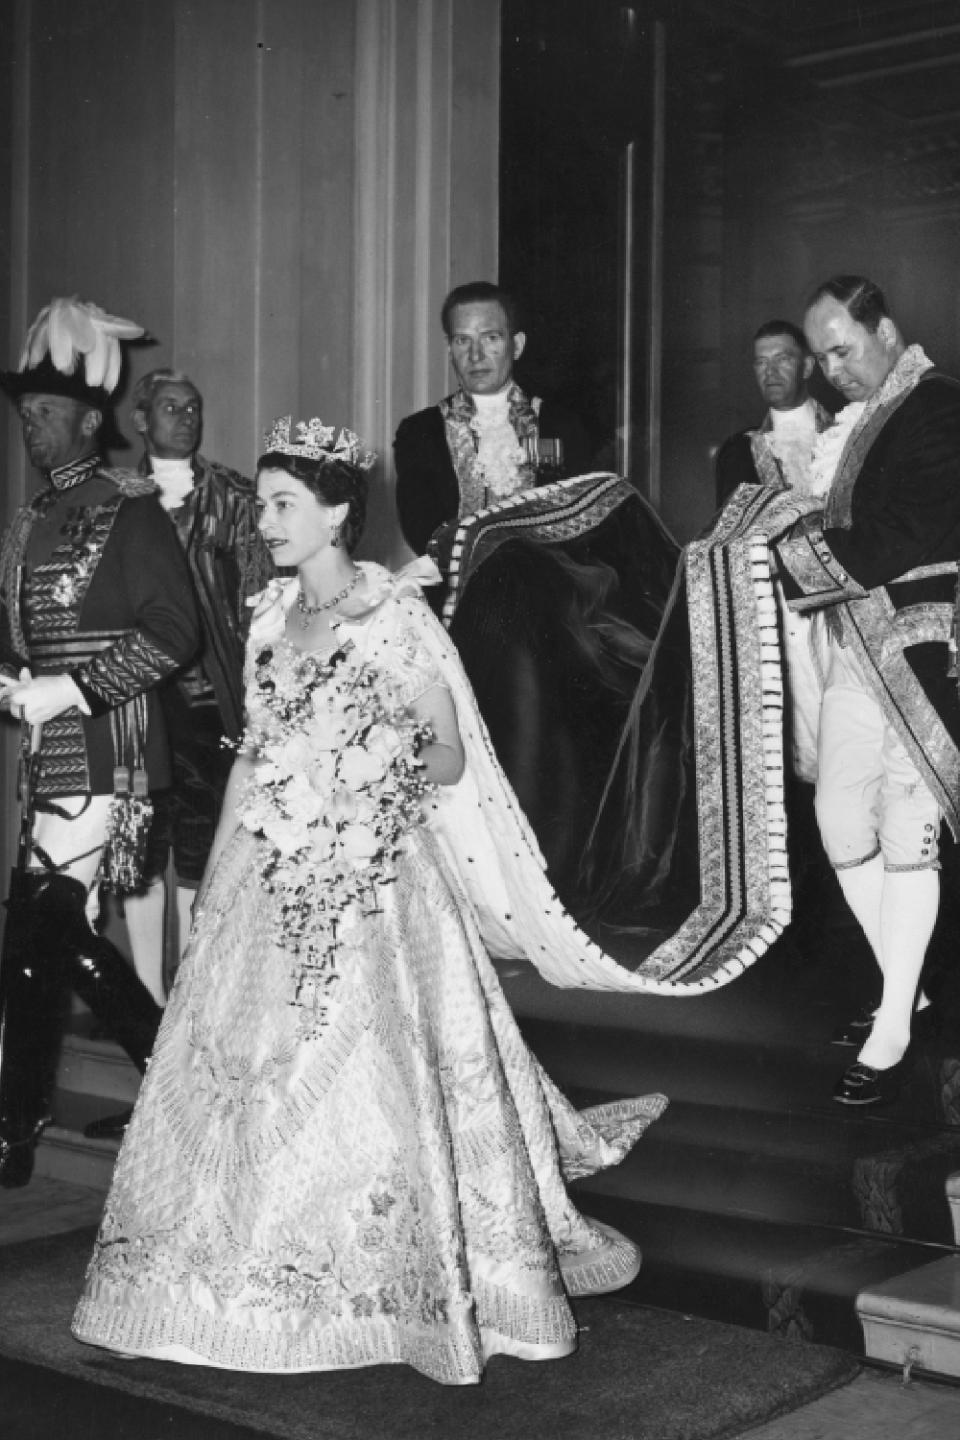 Queen Elizabeth II's Coronation flowers